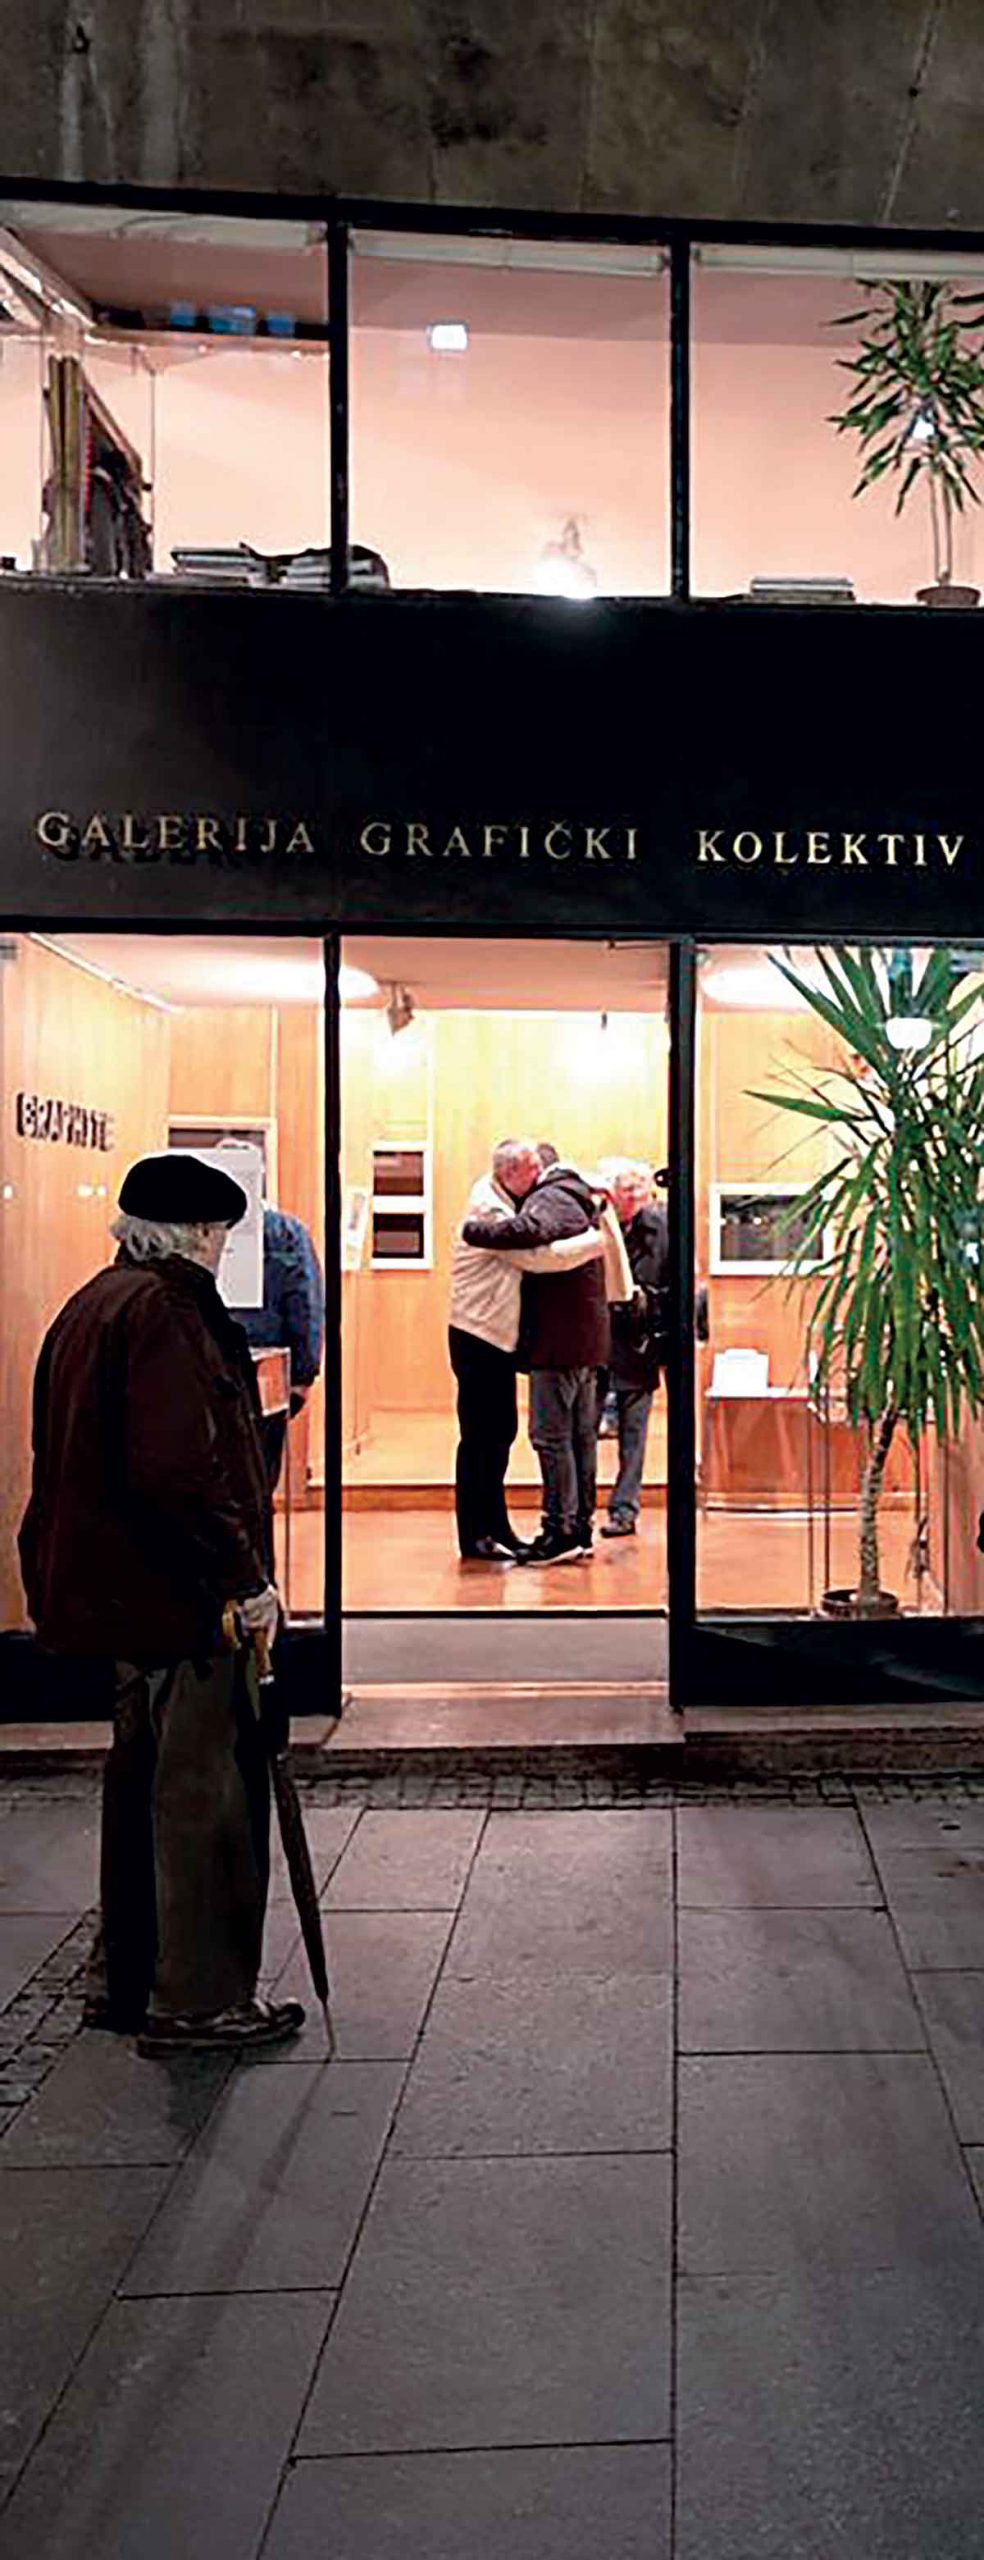 After 70 years of operations, the future of Grafički Kolektiv is uncertain